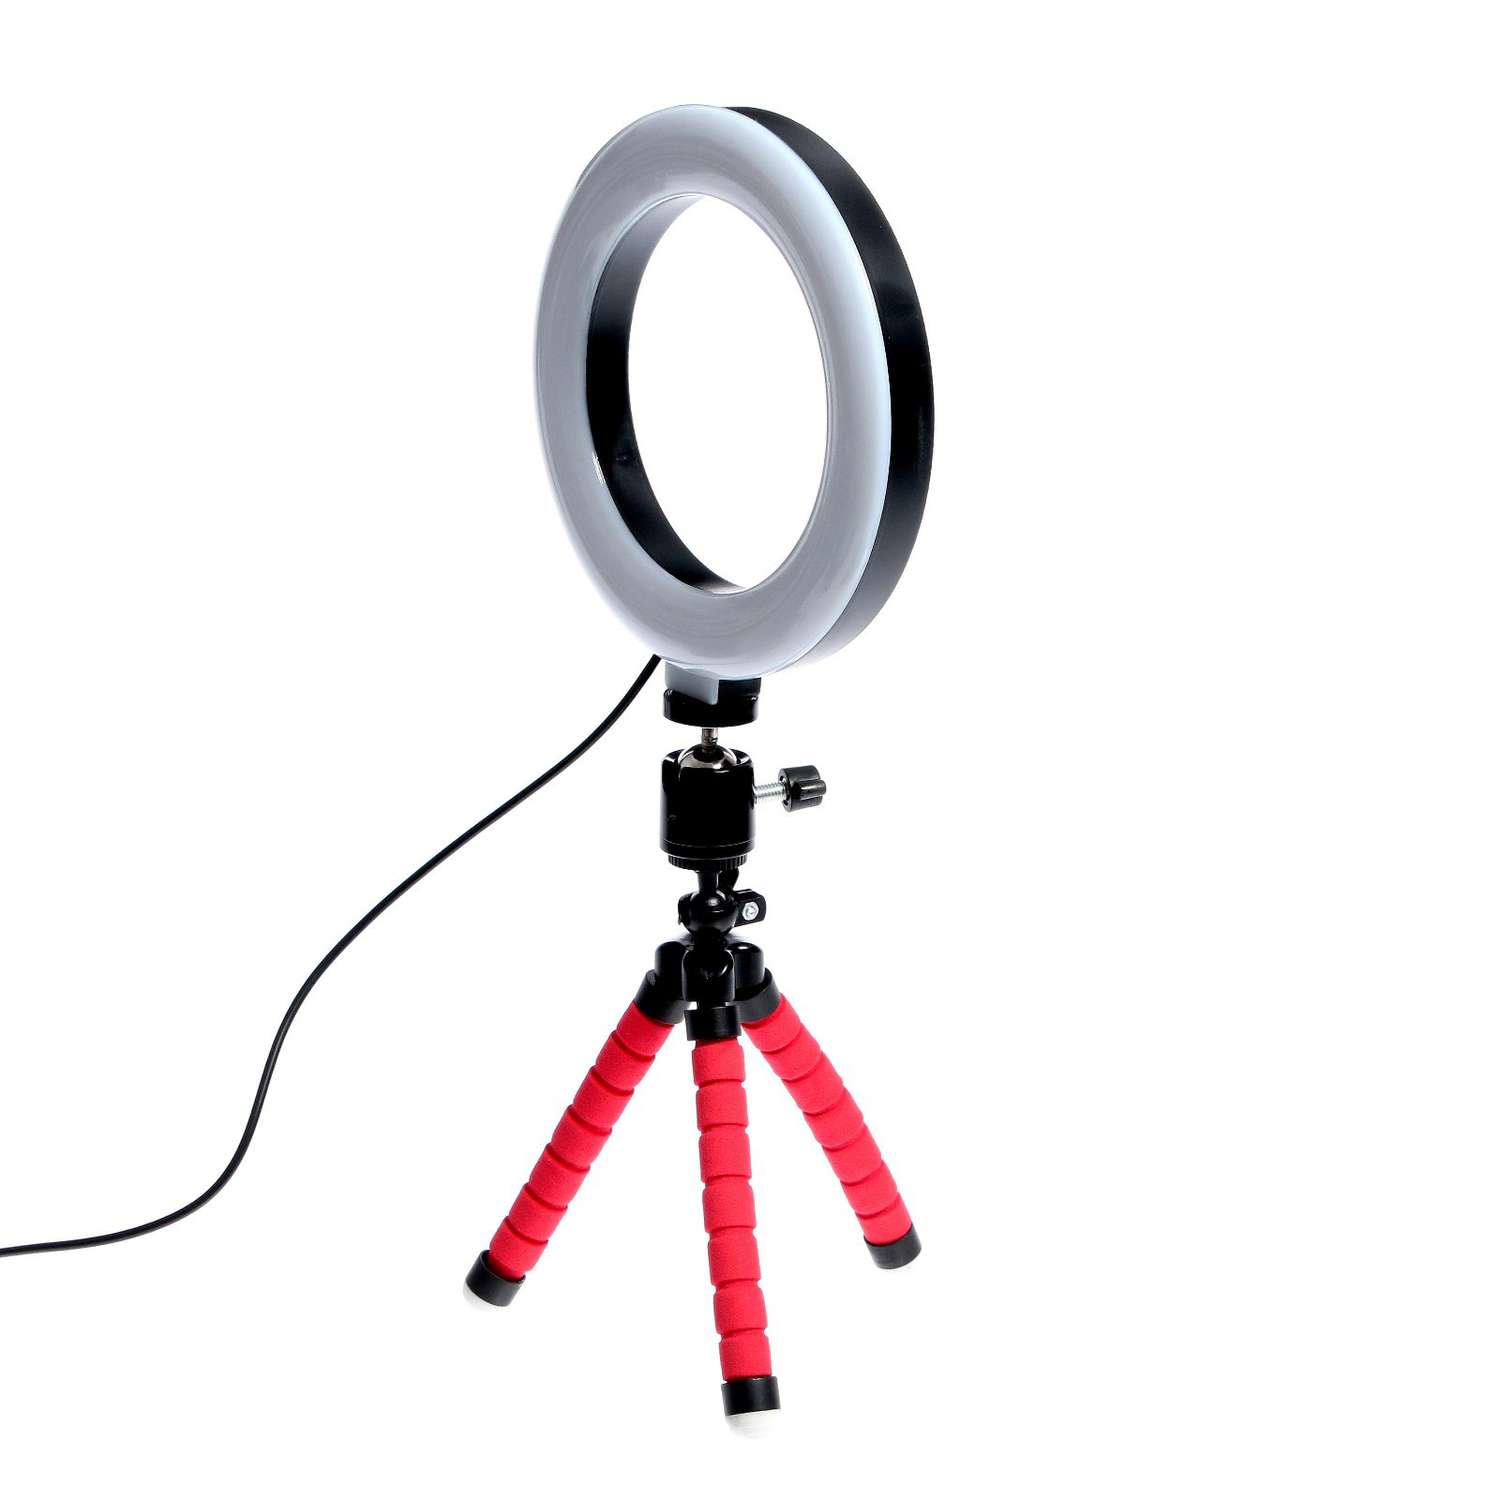 Кольцевая лампа Школа Талантов набор для съёмок видео - фото 8